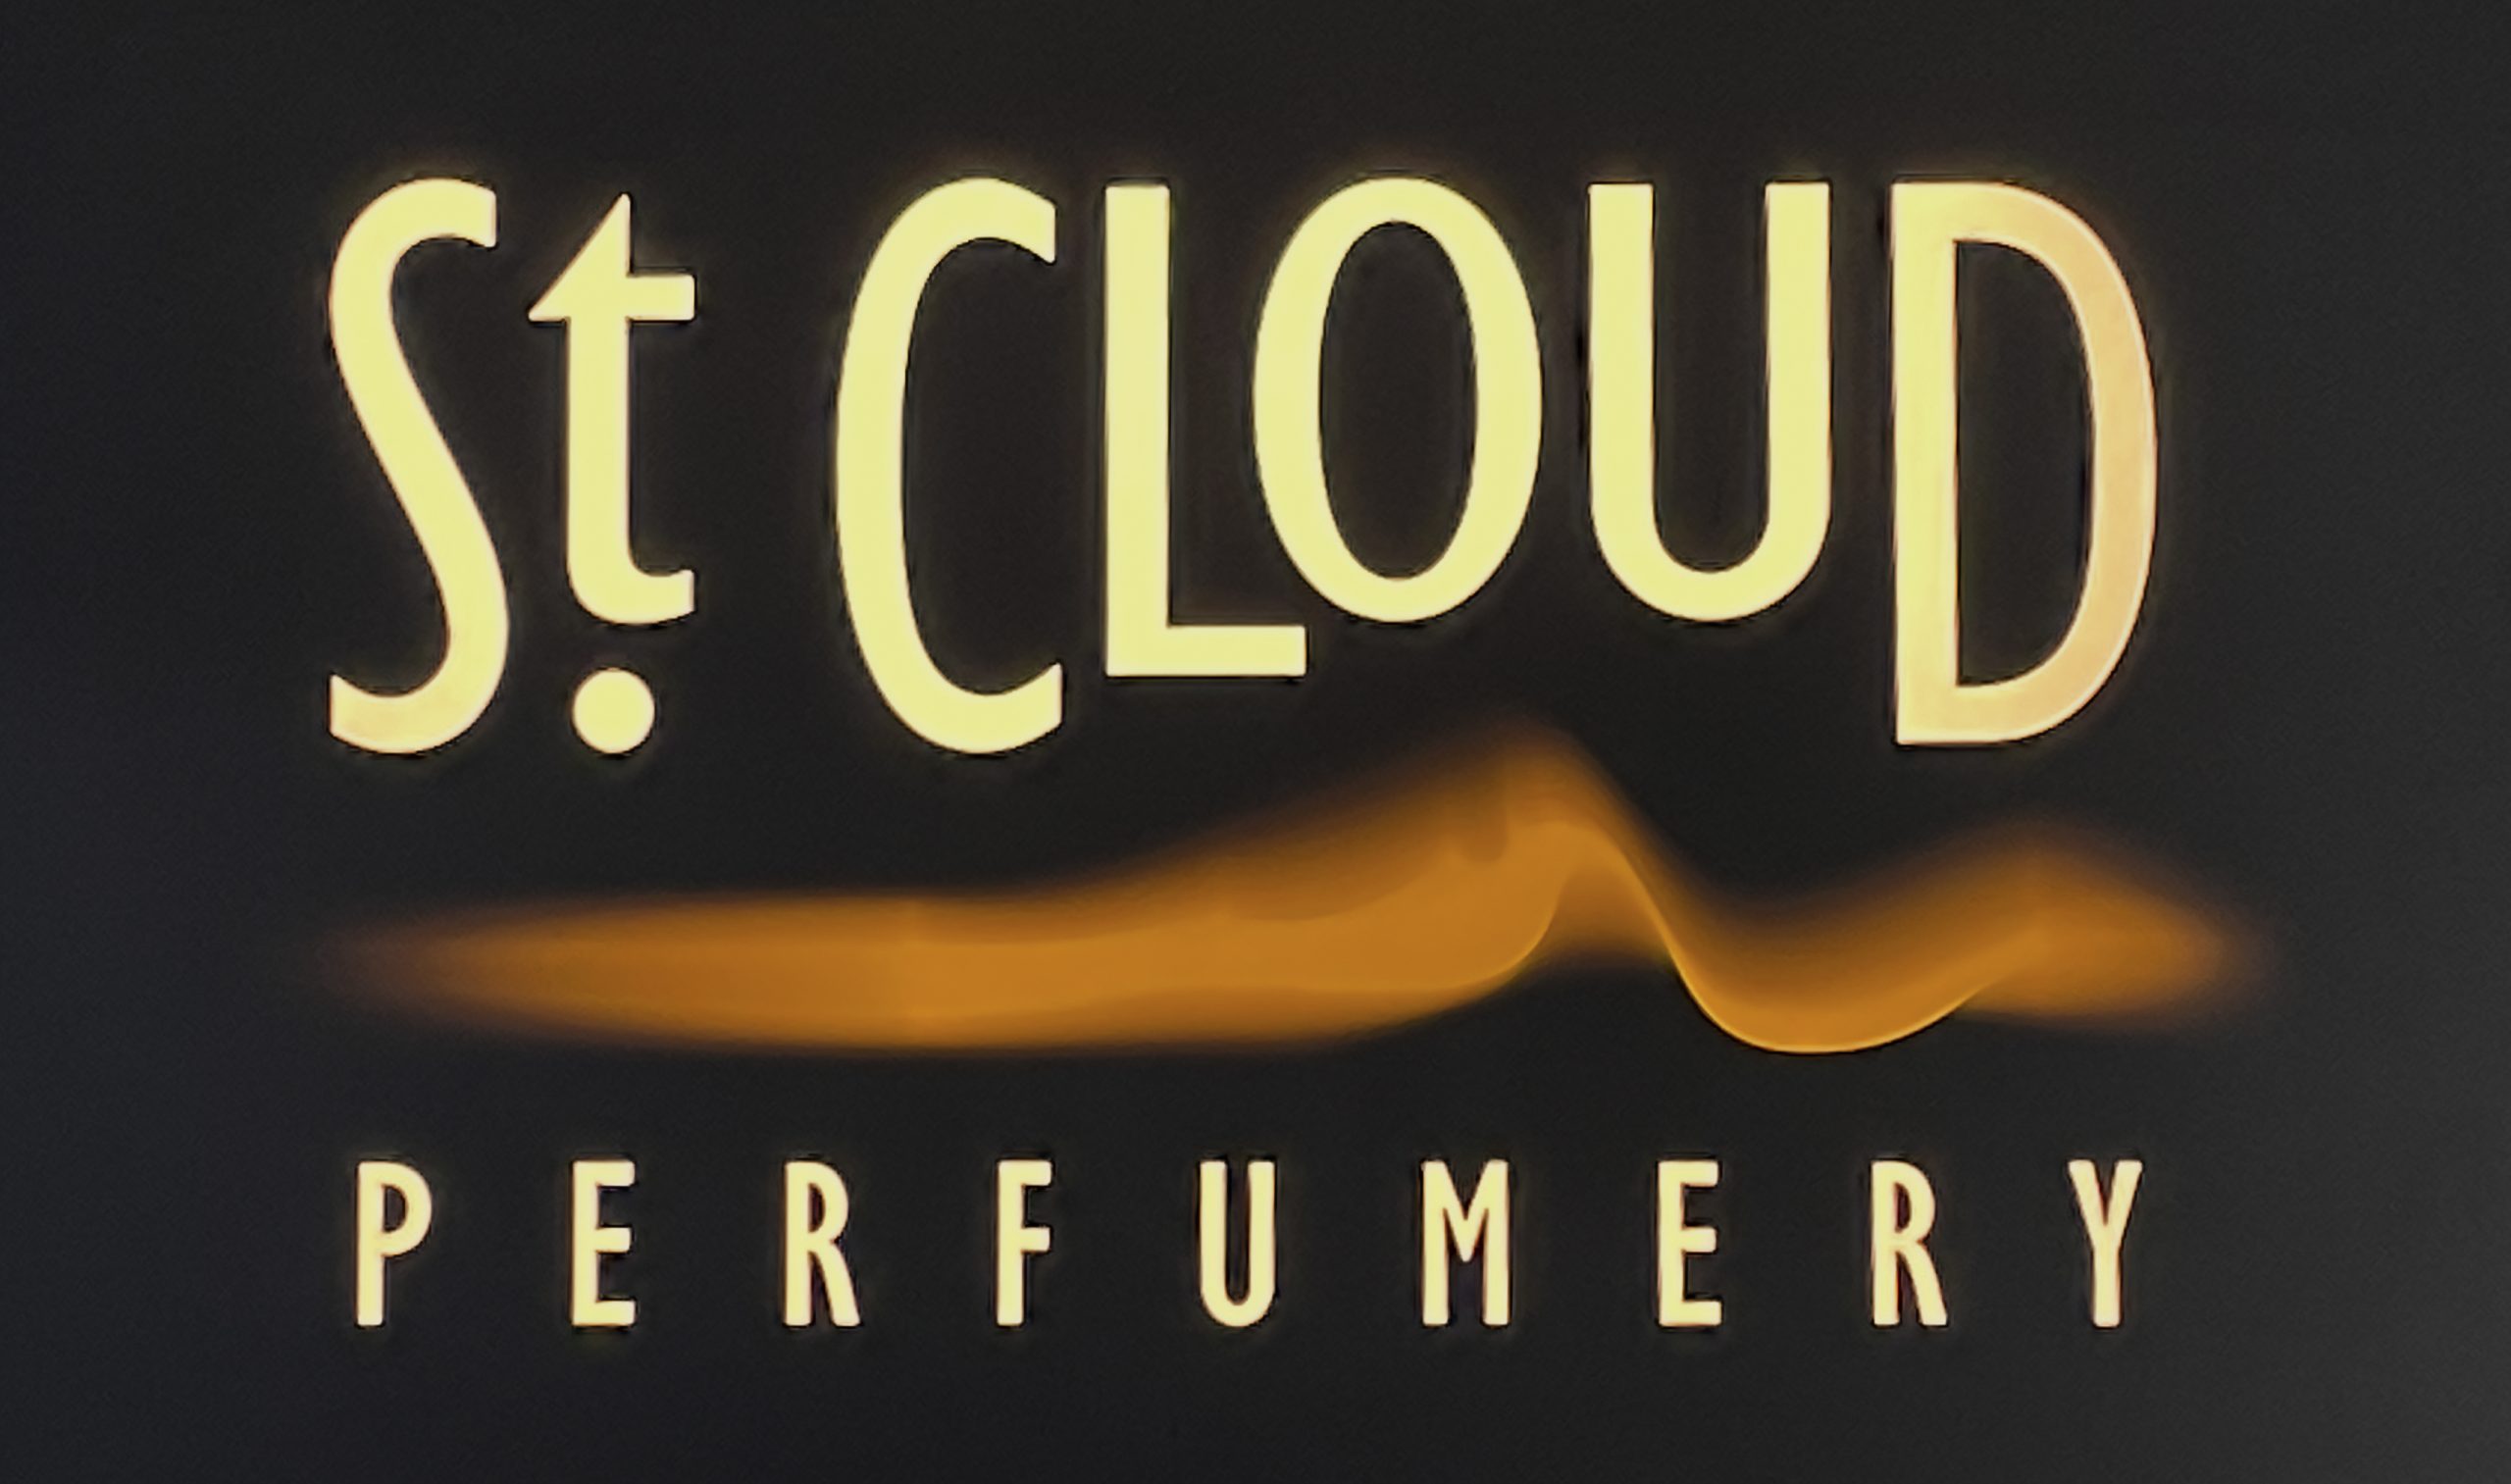 St Cloud Perfumery